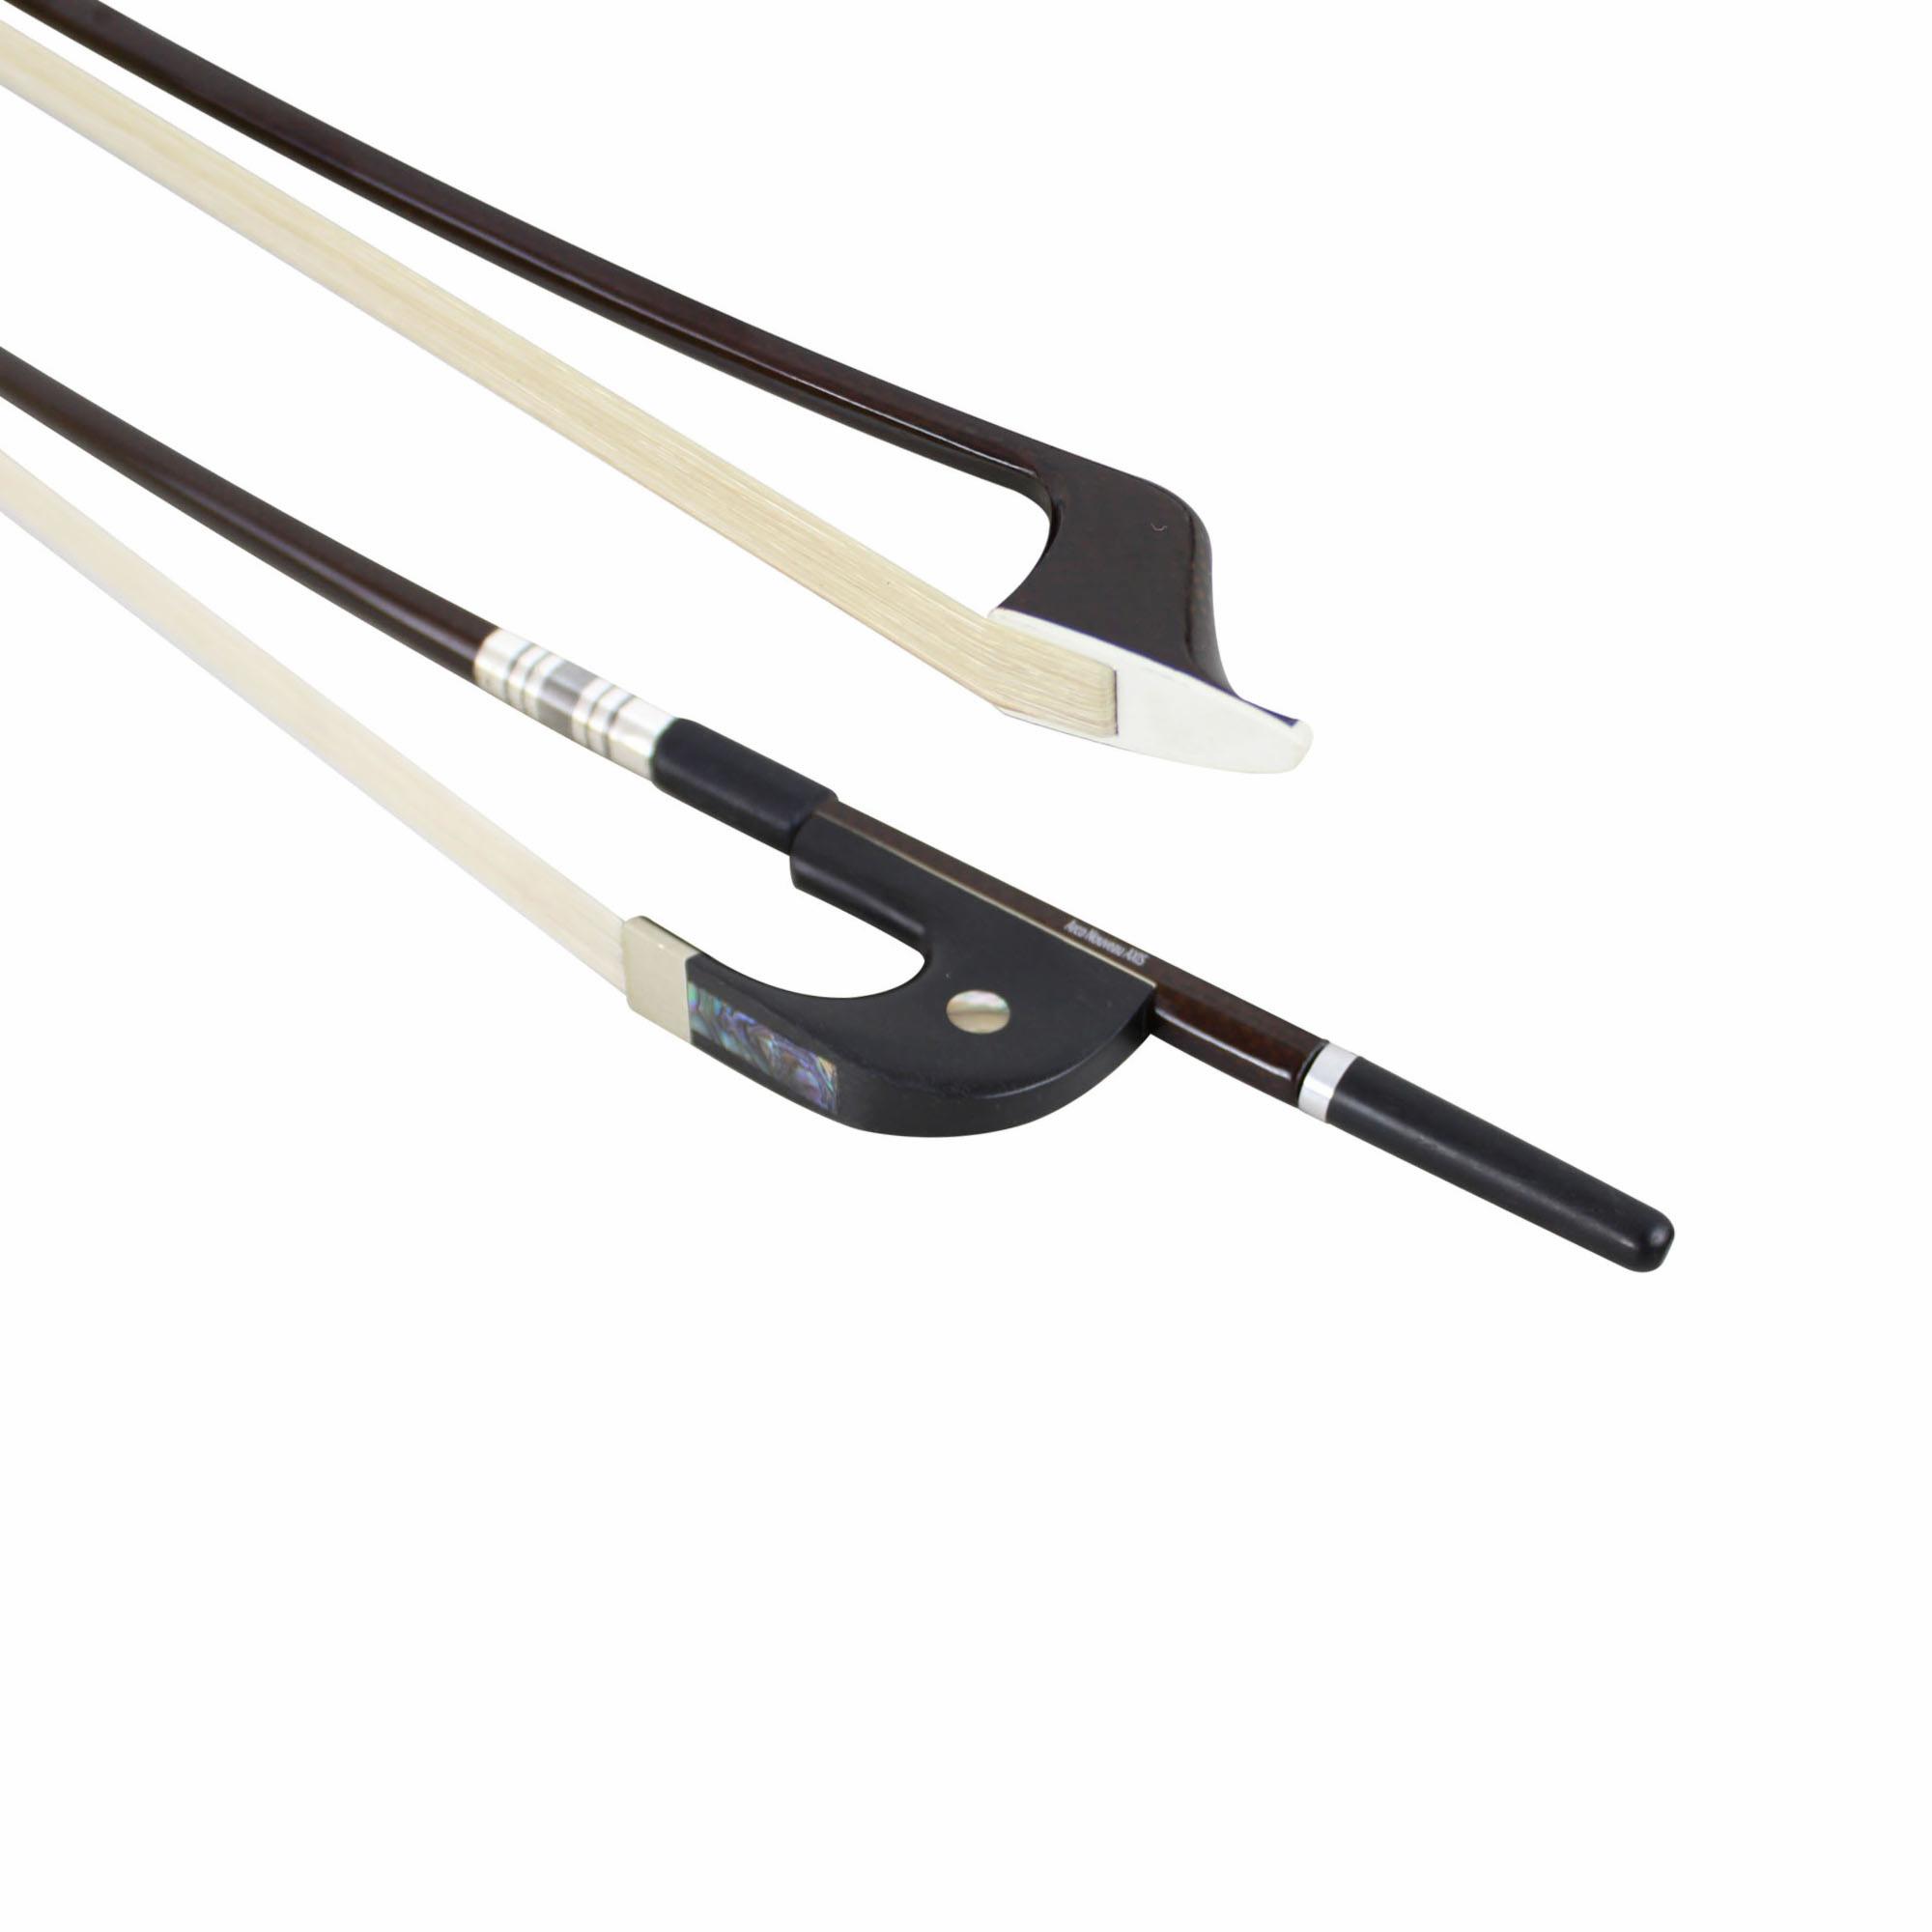 Arco Nouveau Axis Round Carbon Fiber Bass Bow